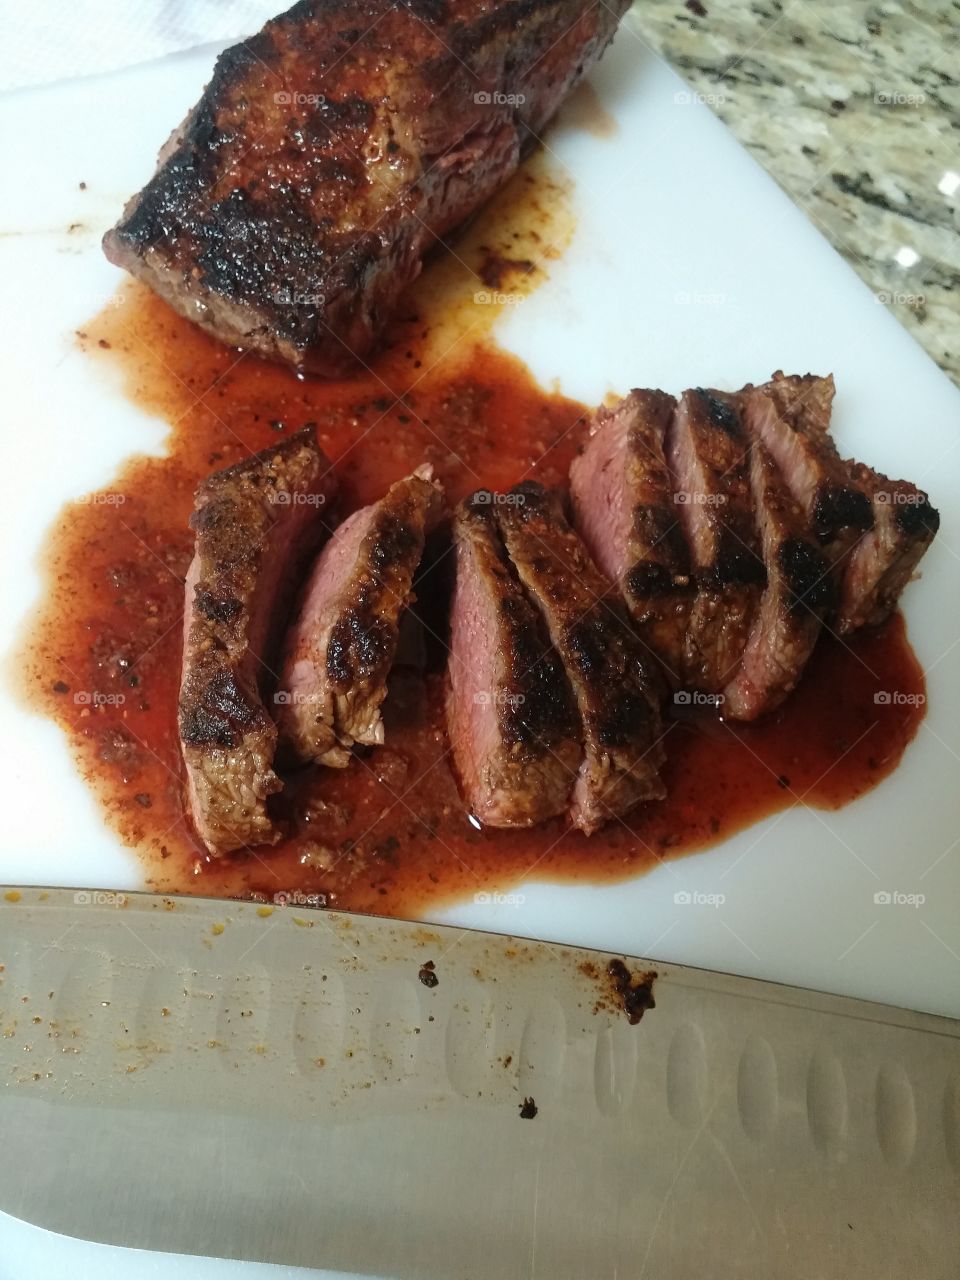 grilled steak resting